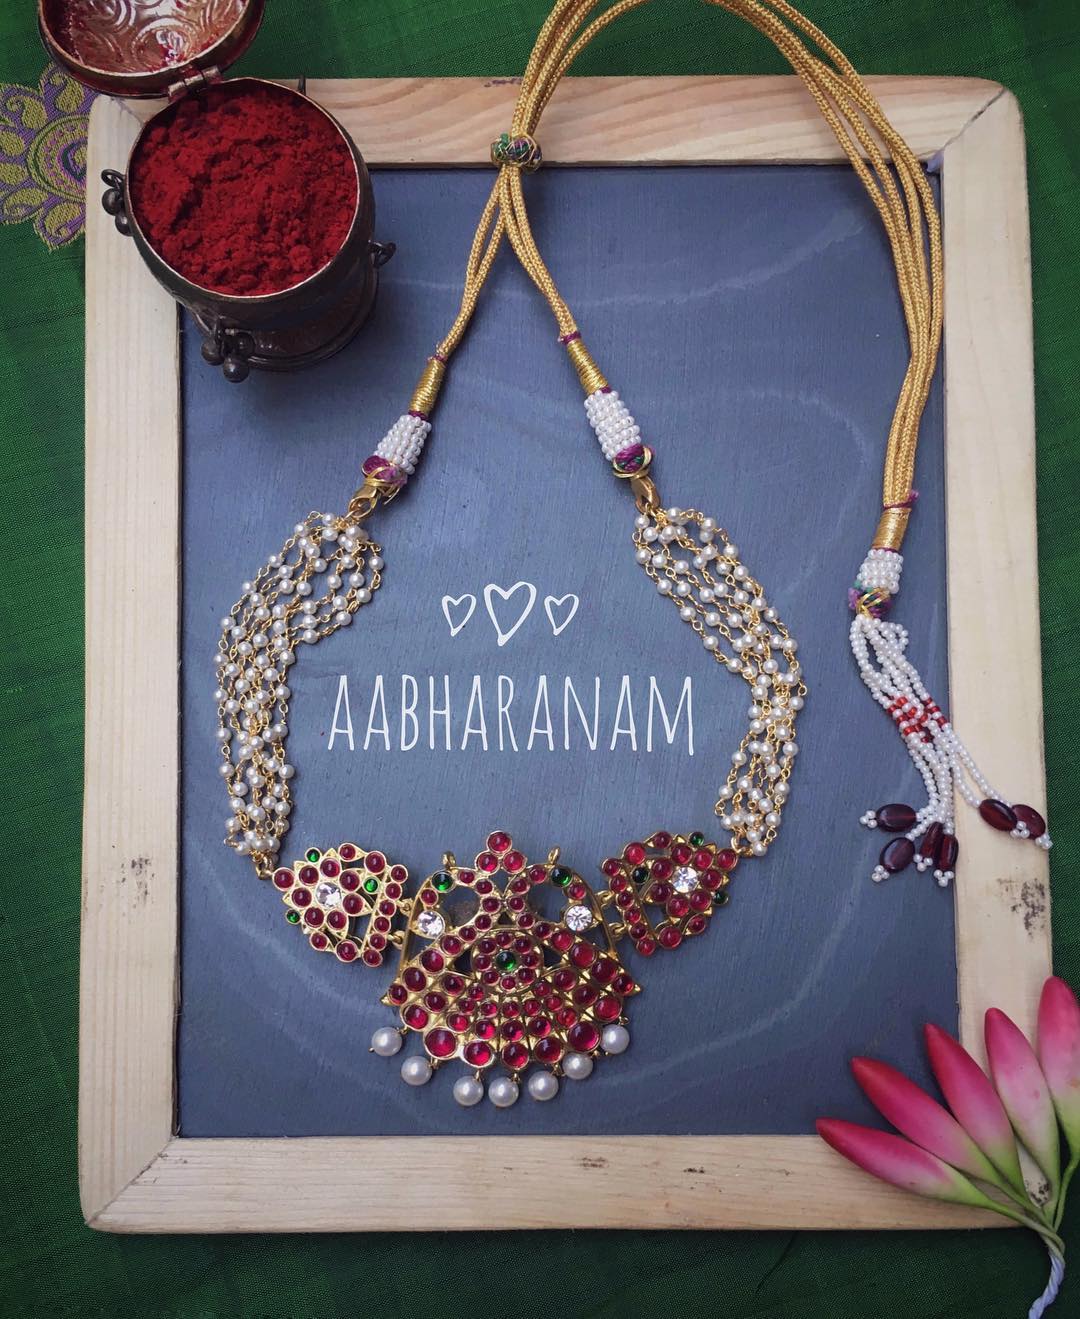 Exquisite Choker From Abharanam